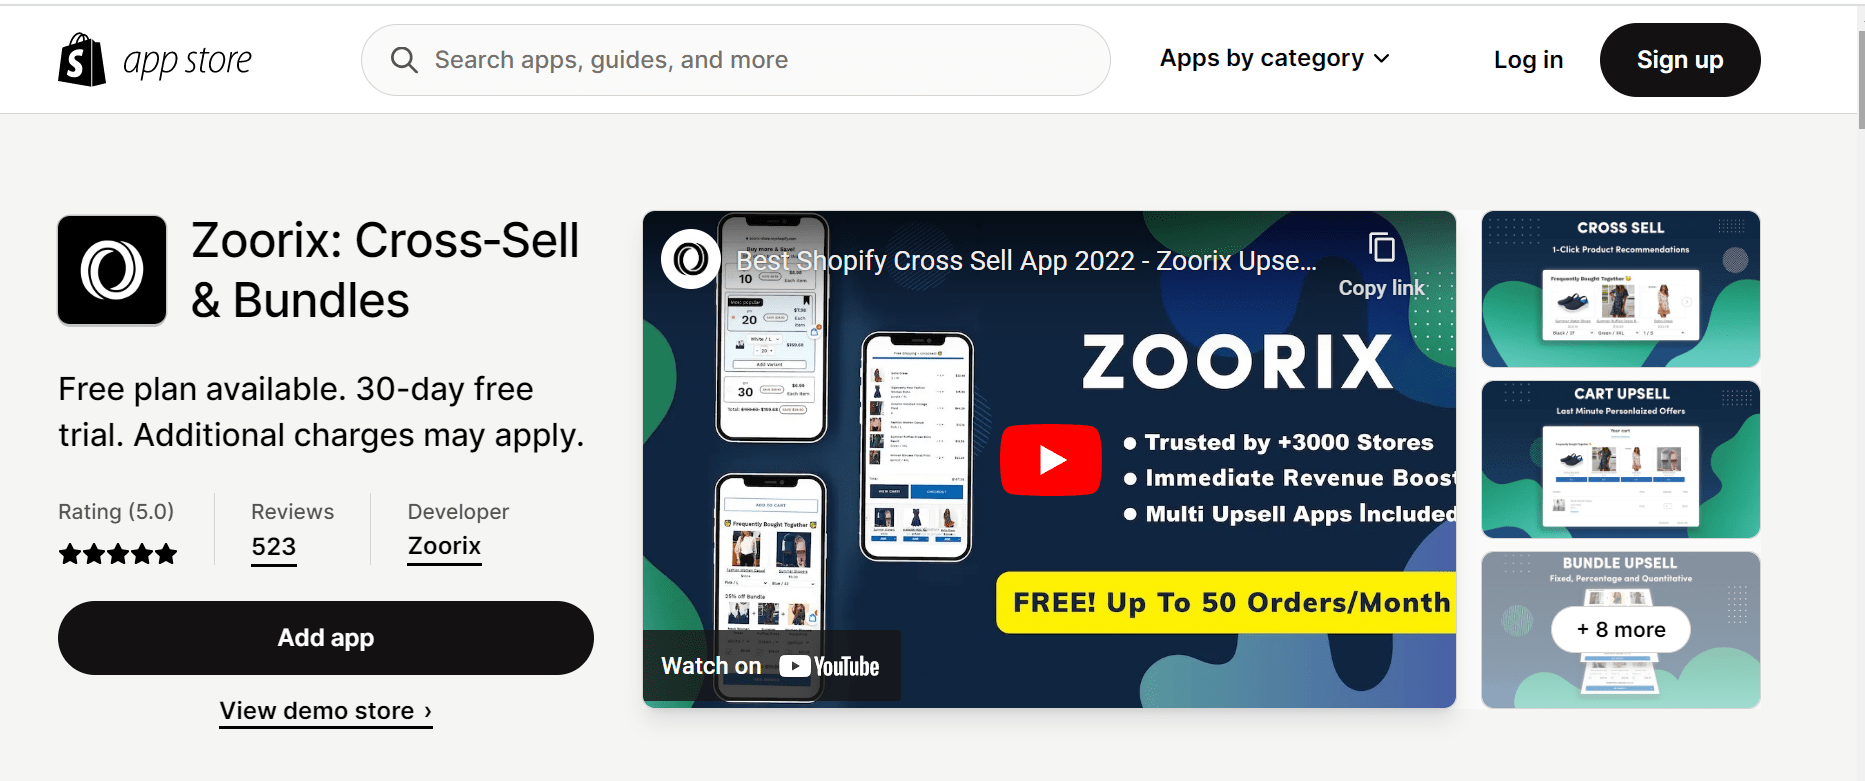 Zoorix 产品推荐应用